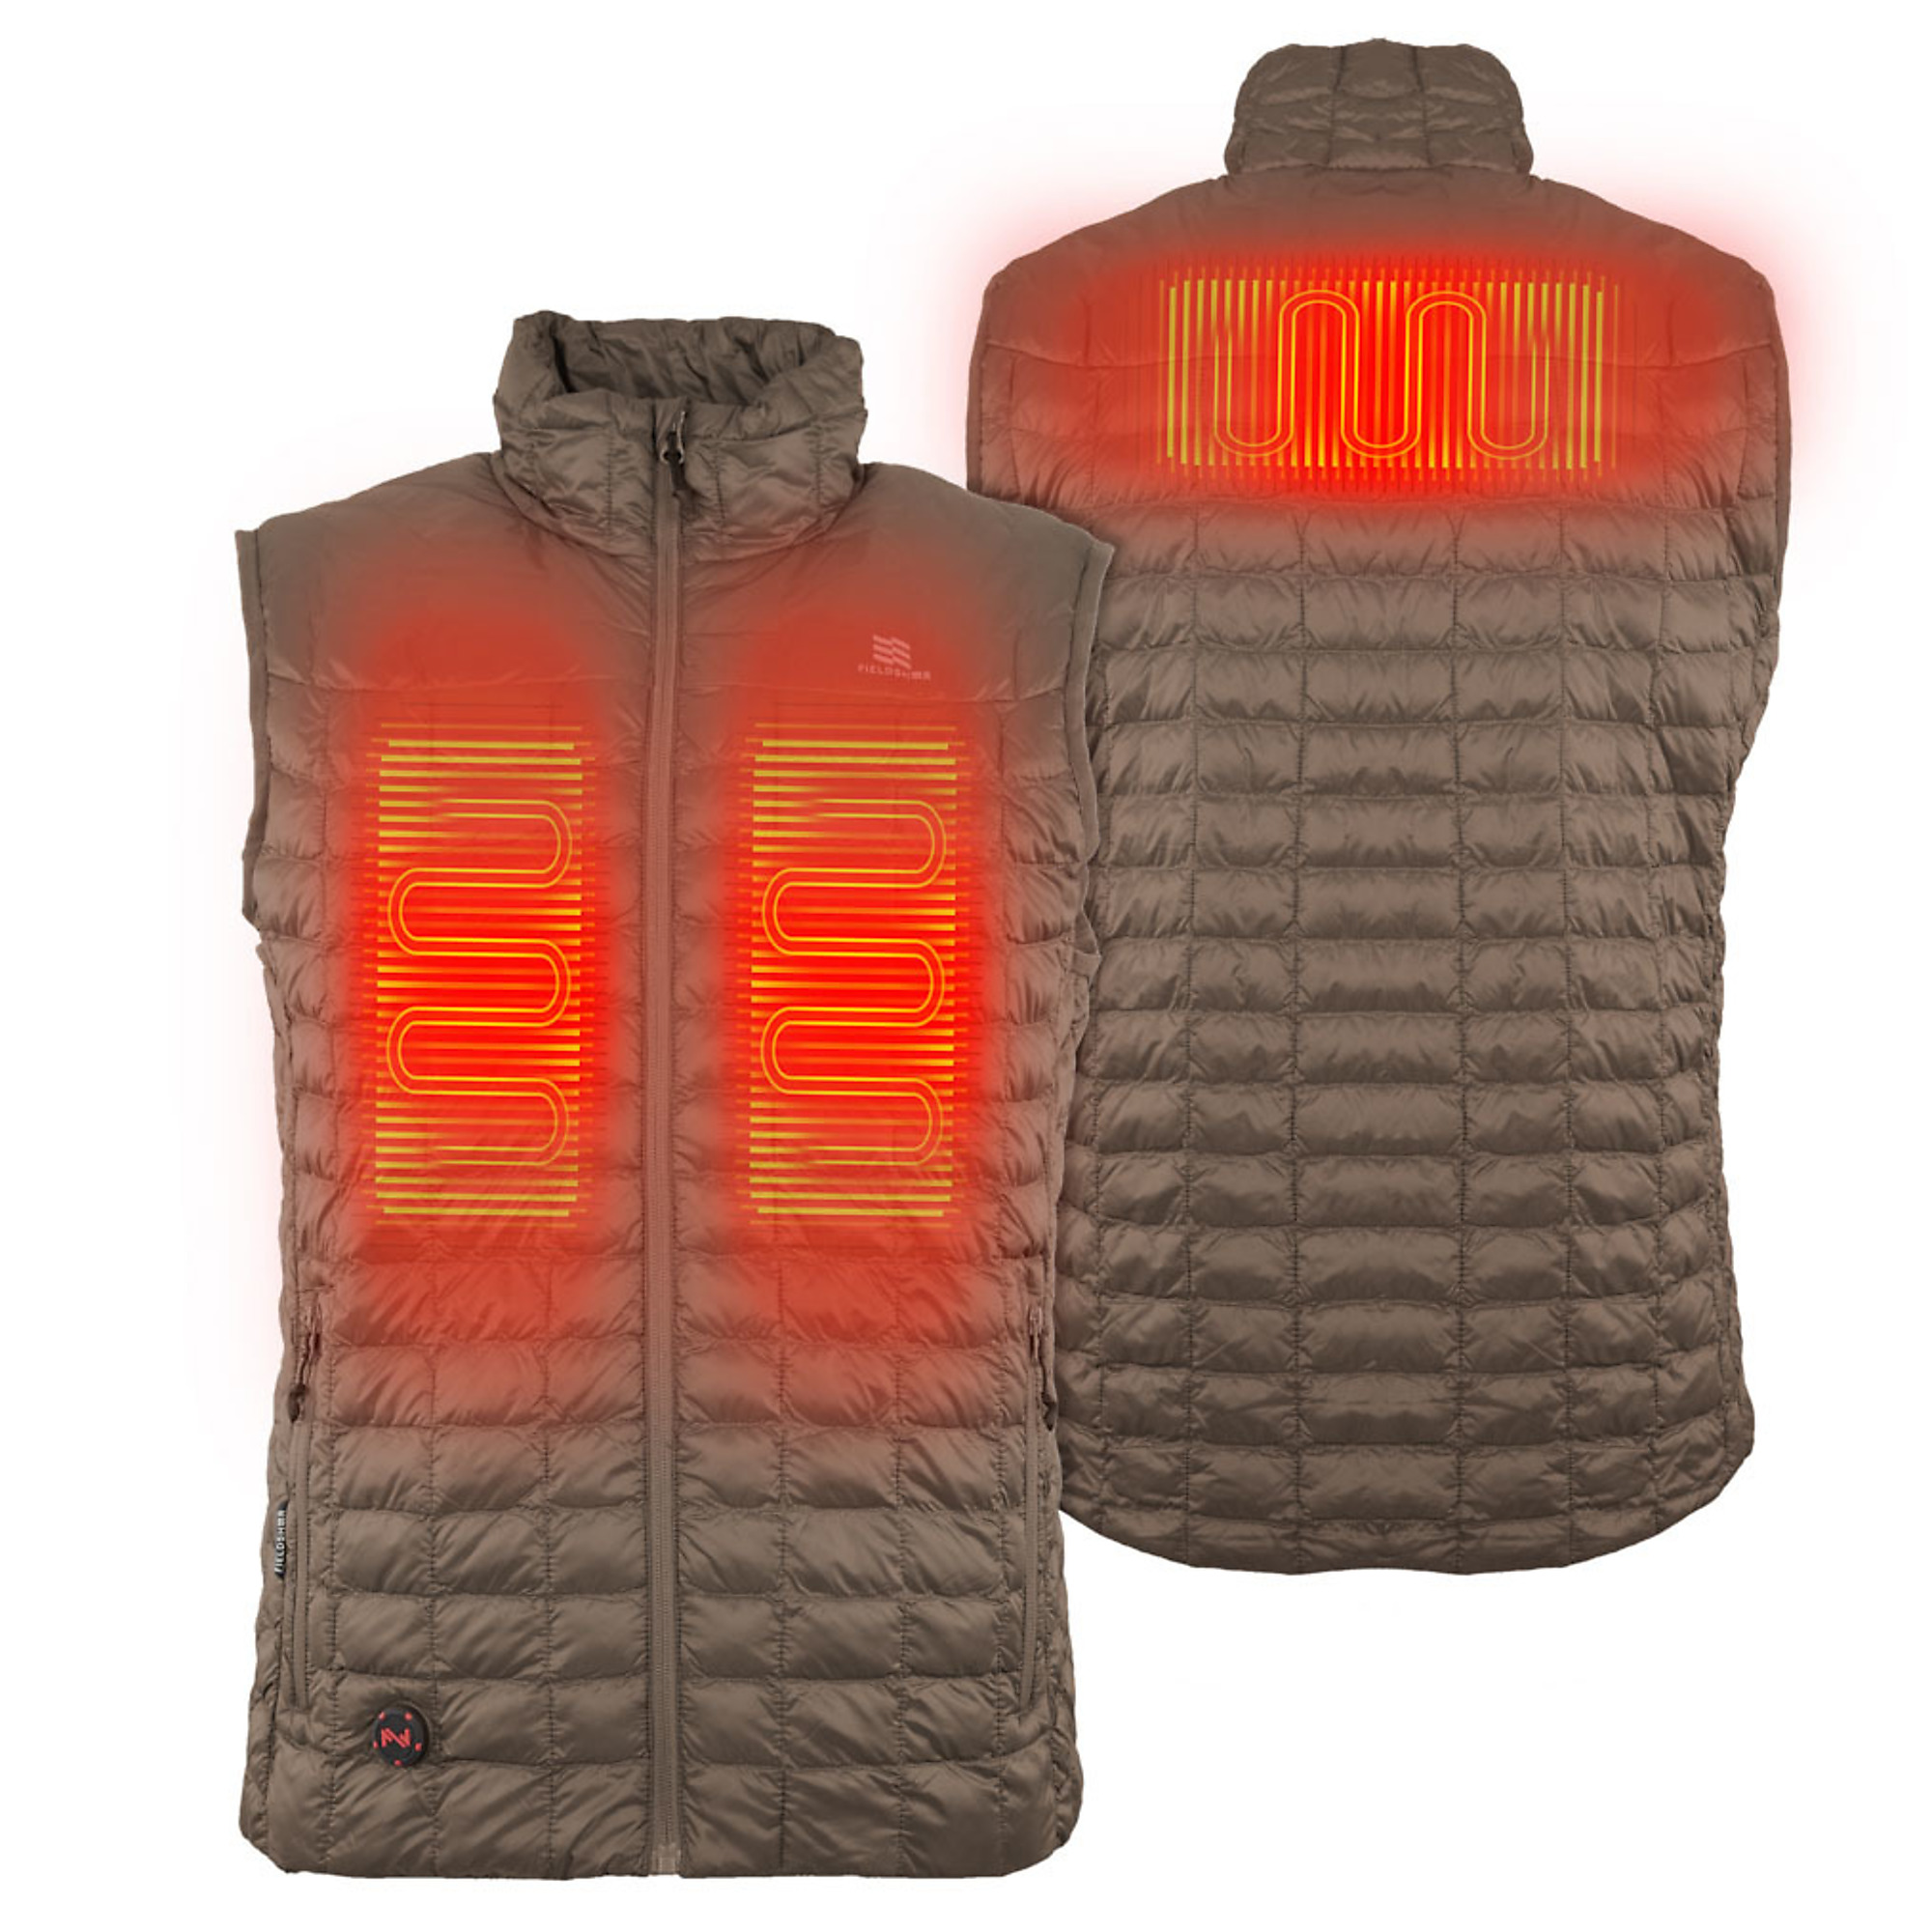 Fieldsheer, Men's Backcountry Heated Vest with 7.4v Battery, Size 2XL, Color Tan, Model MWMV04340621